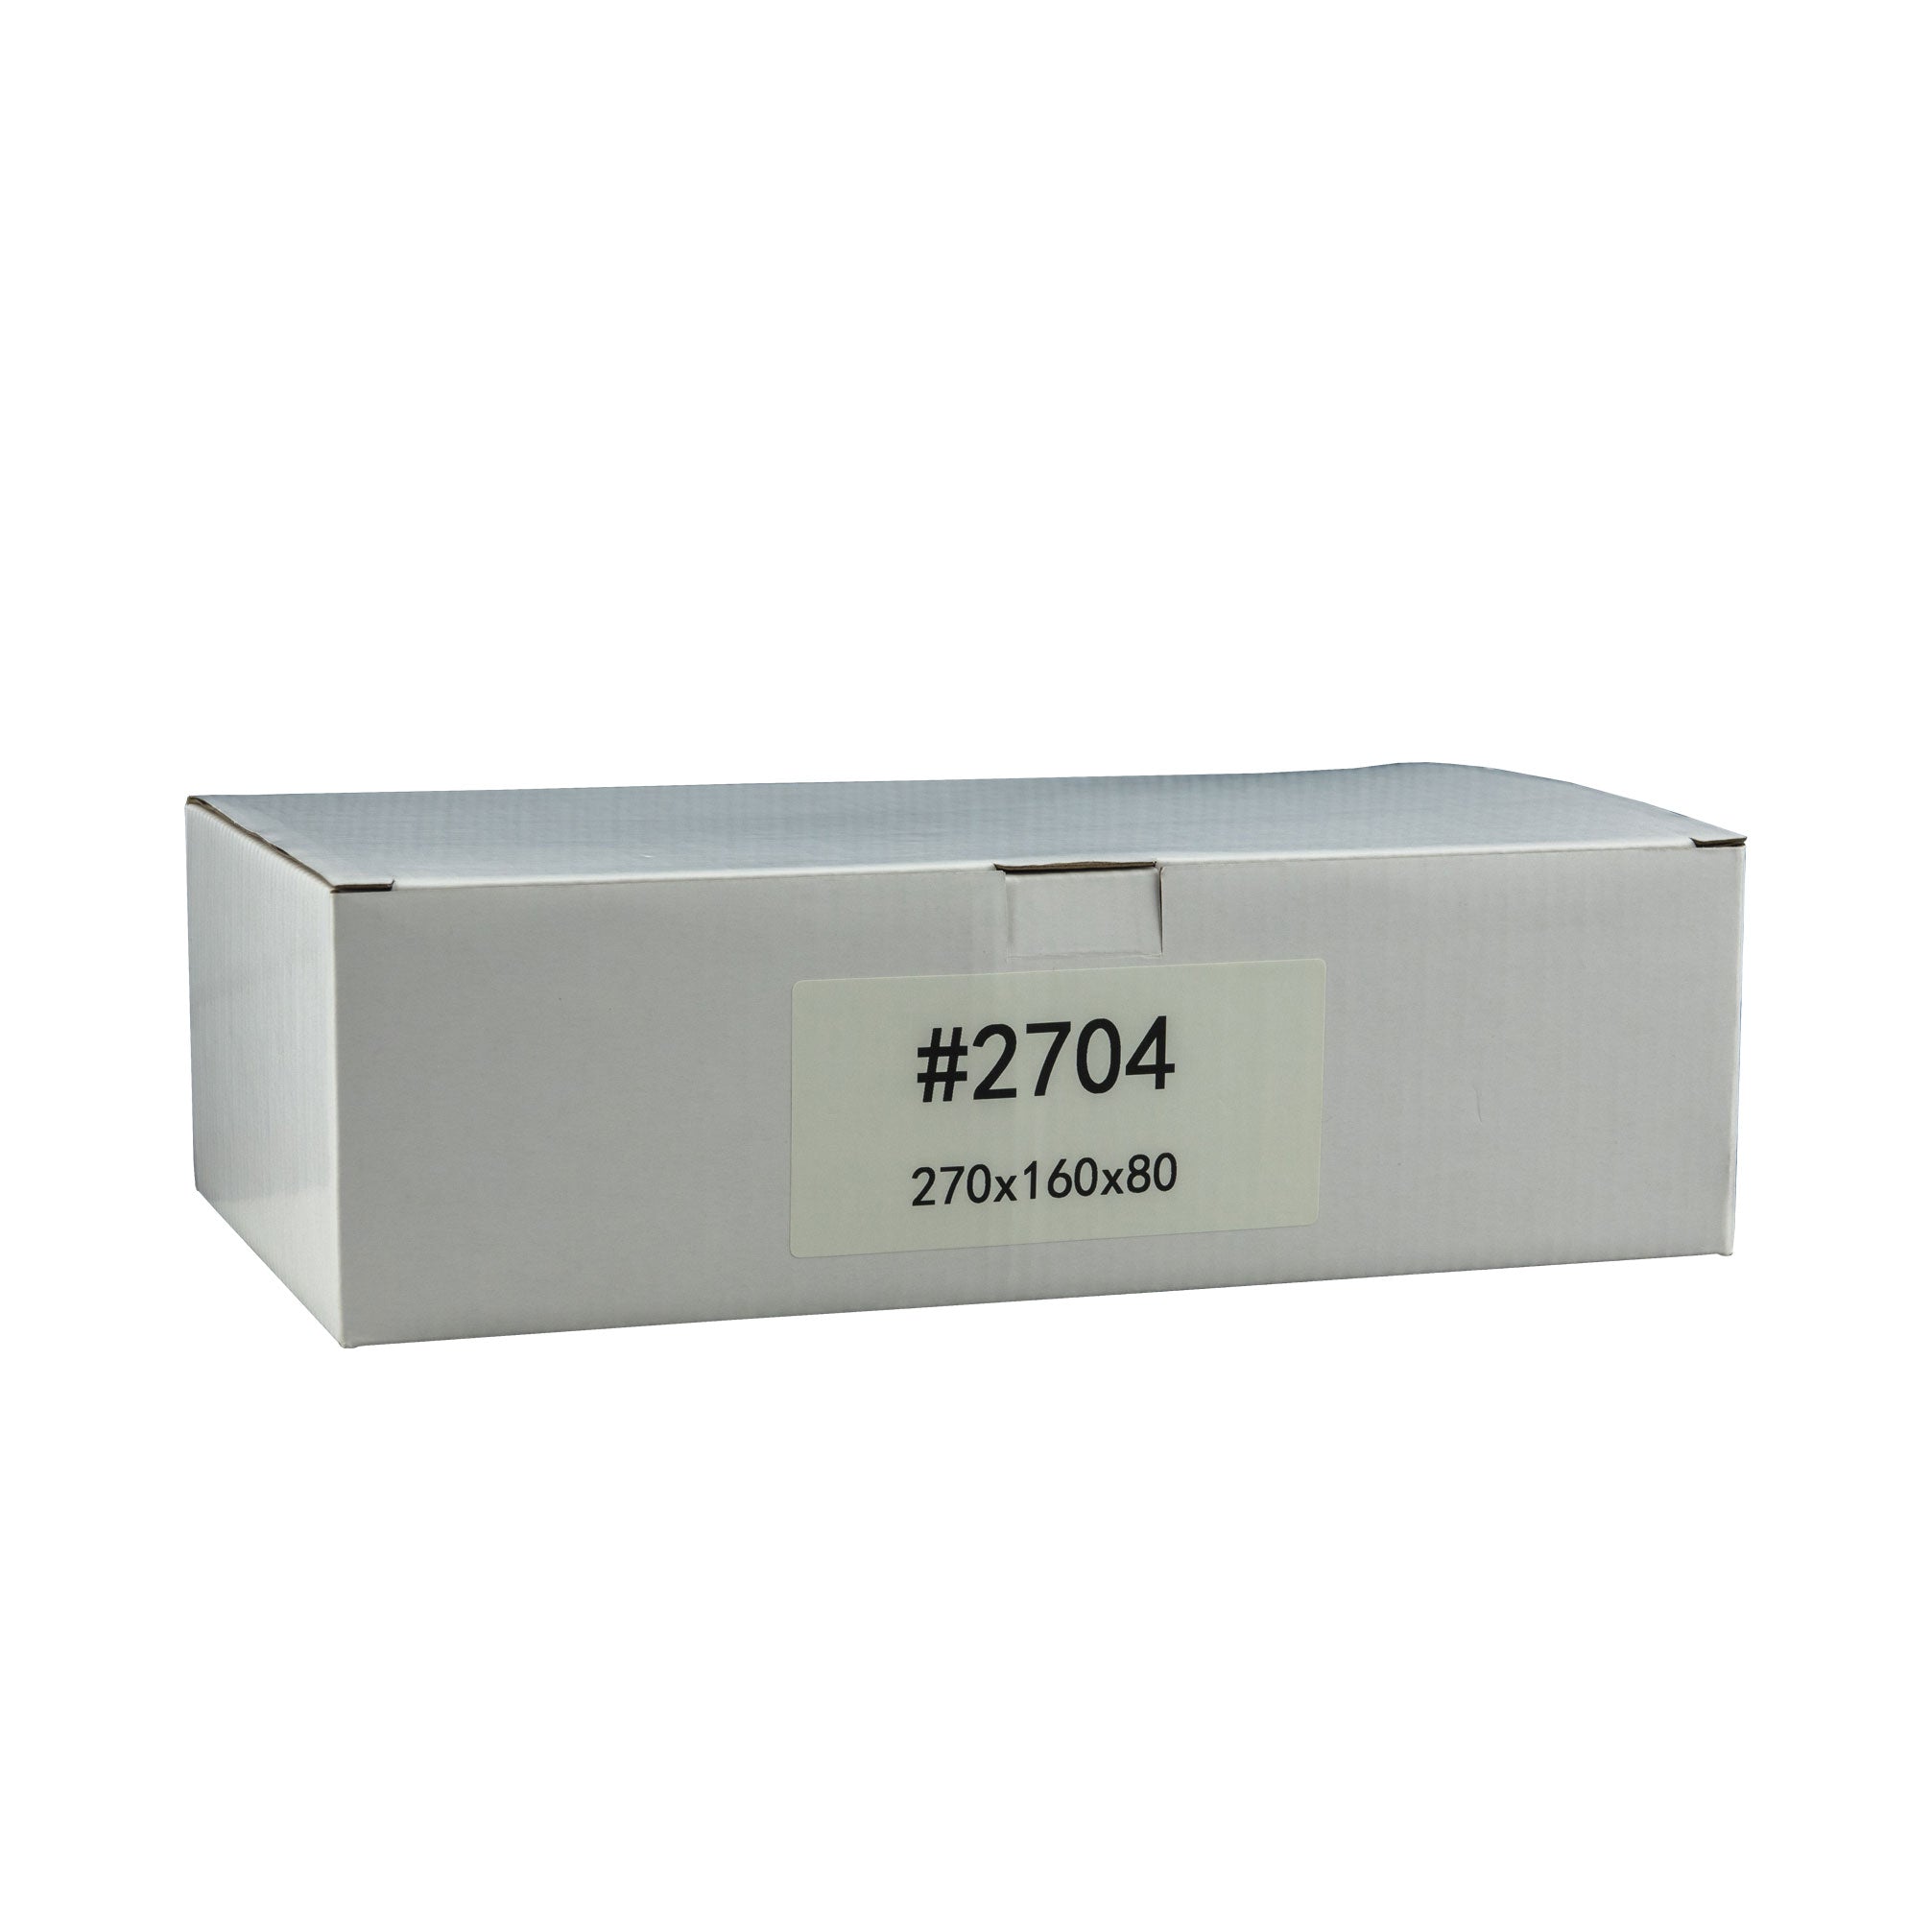 270mm x 160mm x 80mm White Carton Cardboard Shipping Box (#2704)